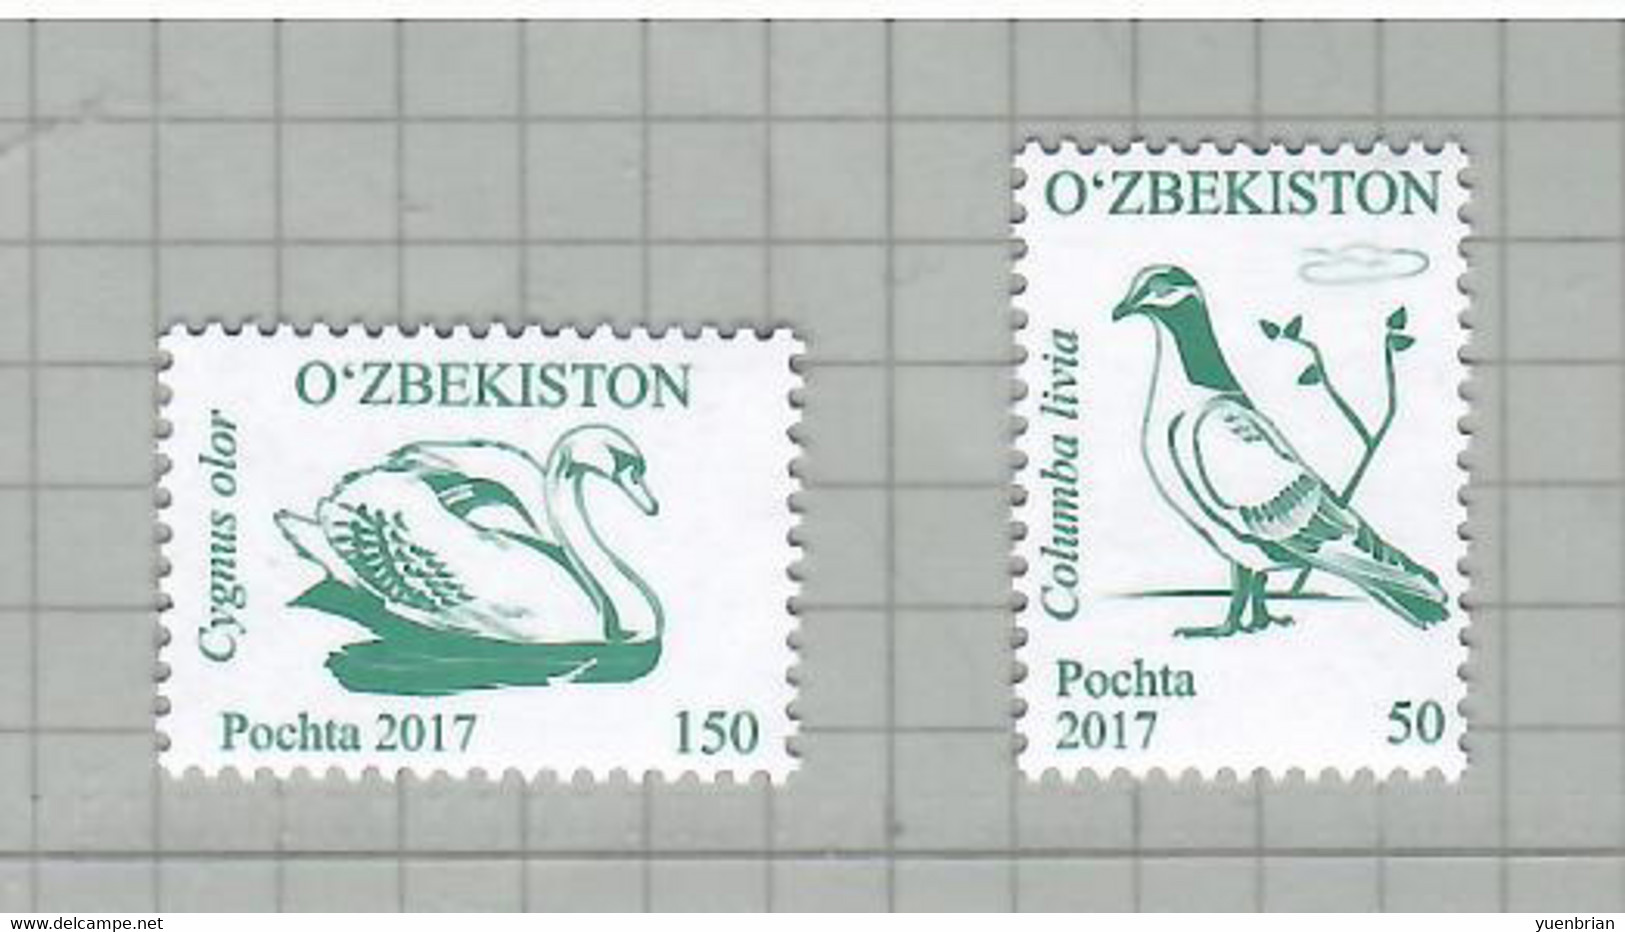 Uzbekistan 2017, Bird, Birds, 2v, MNH** - Cygnes